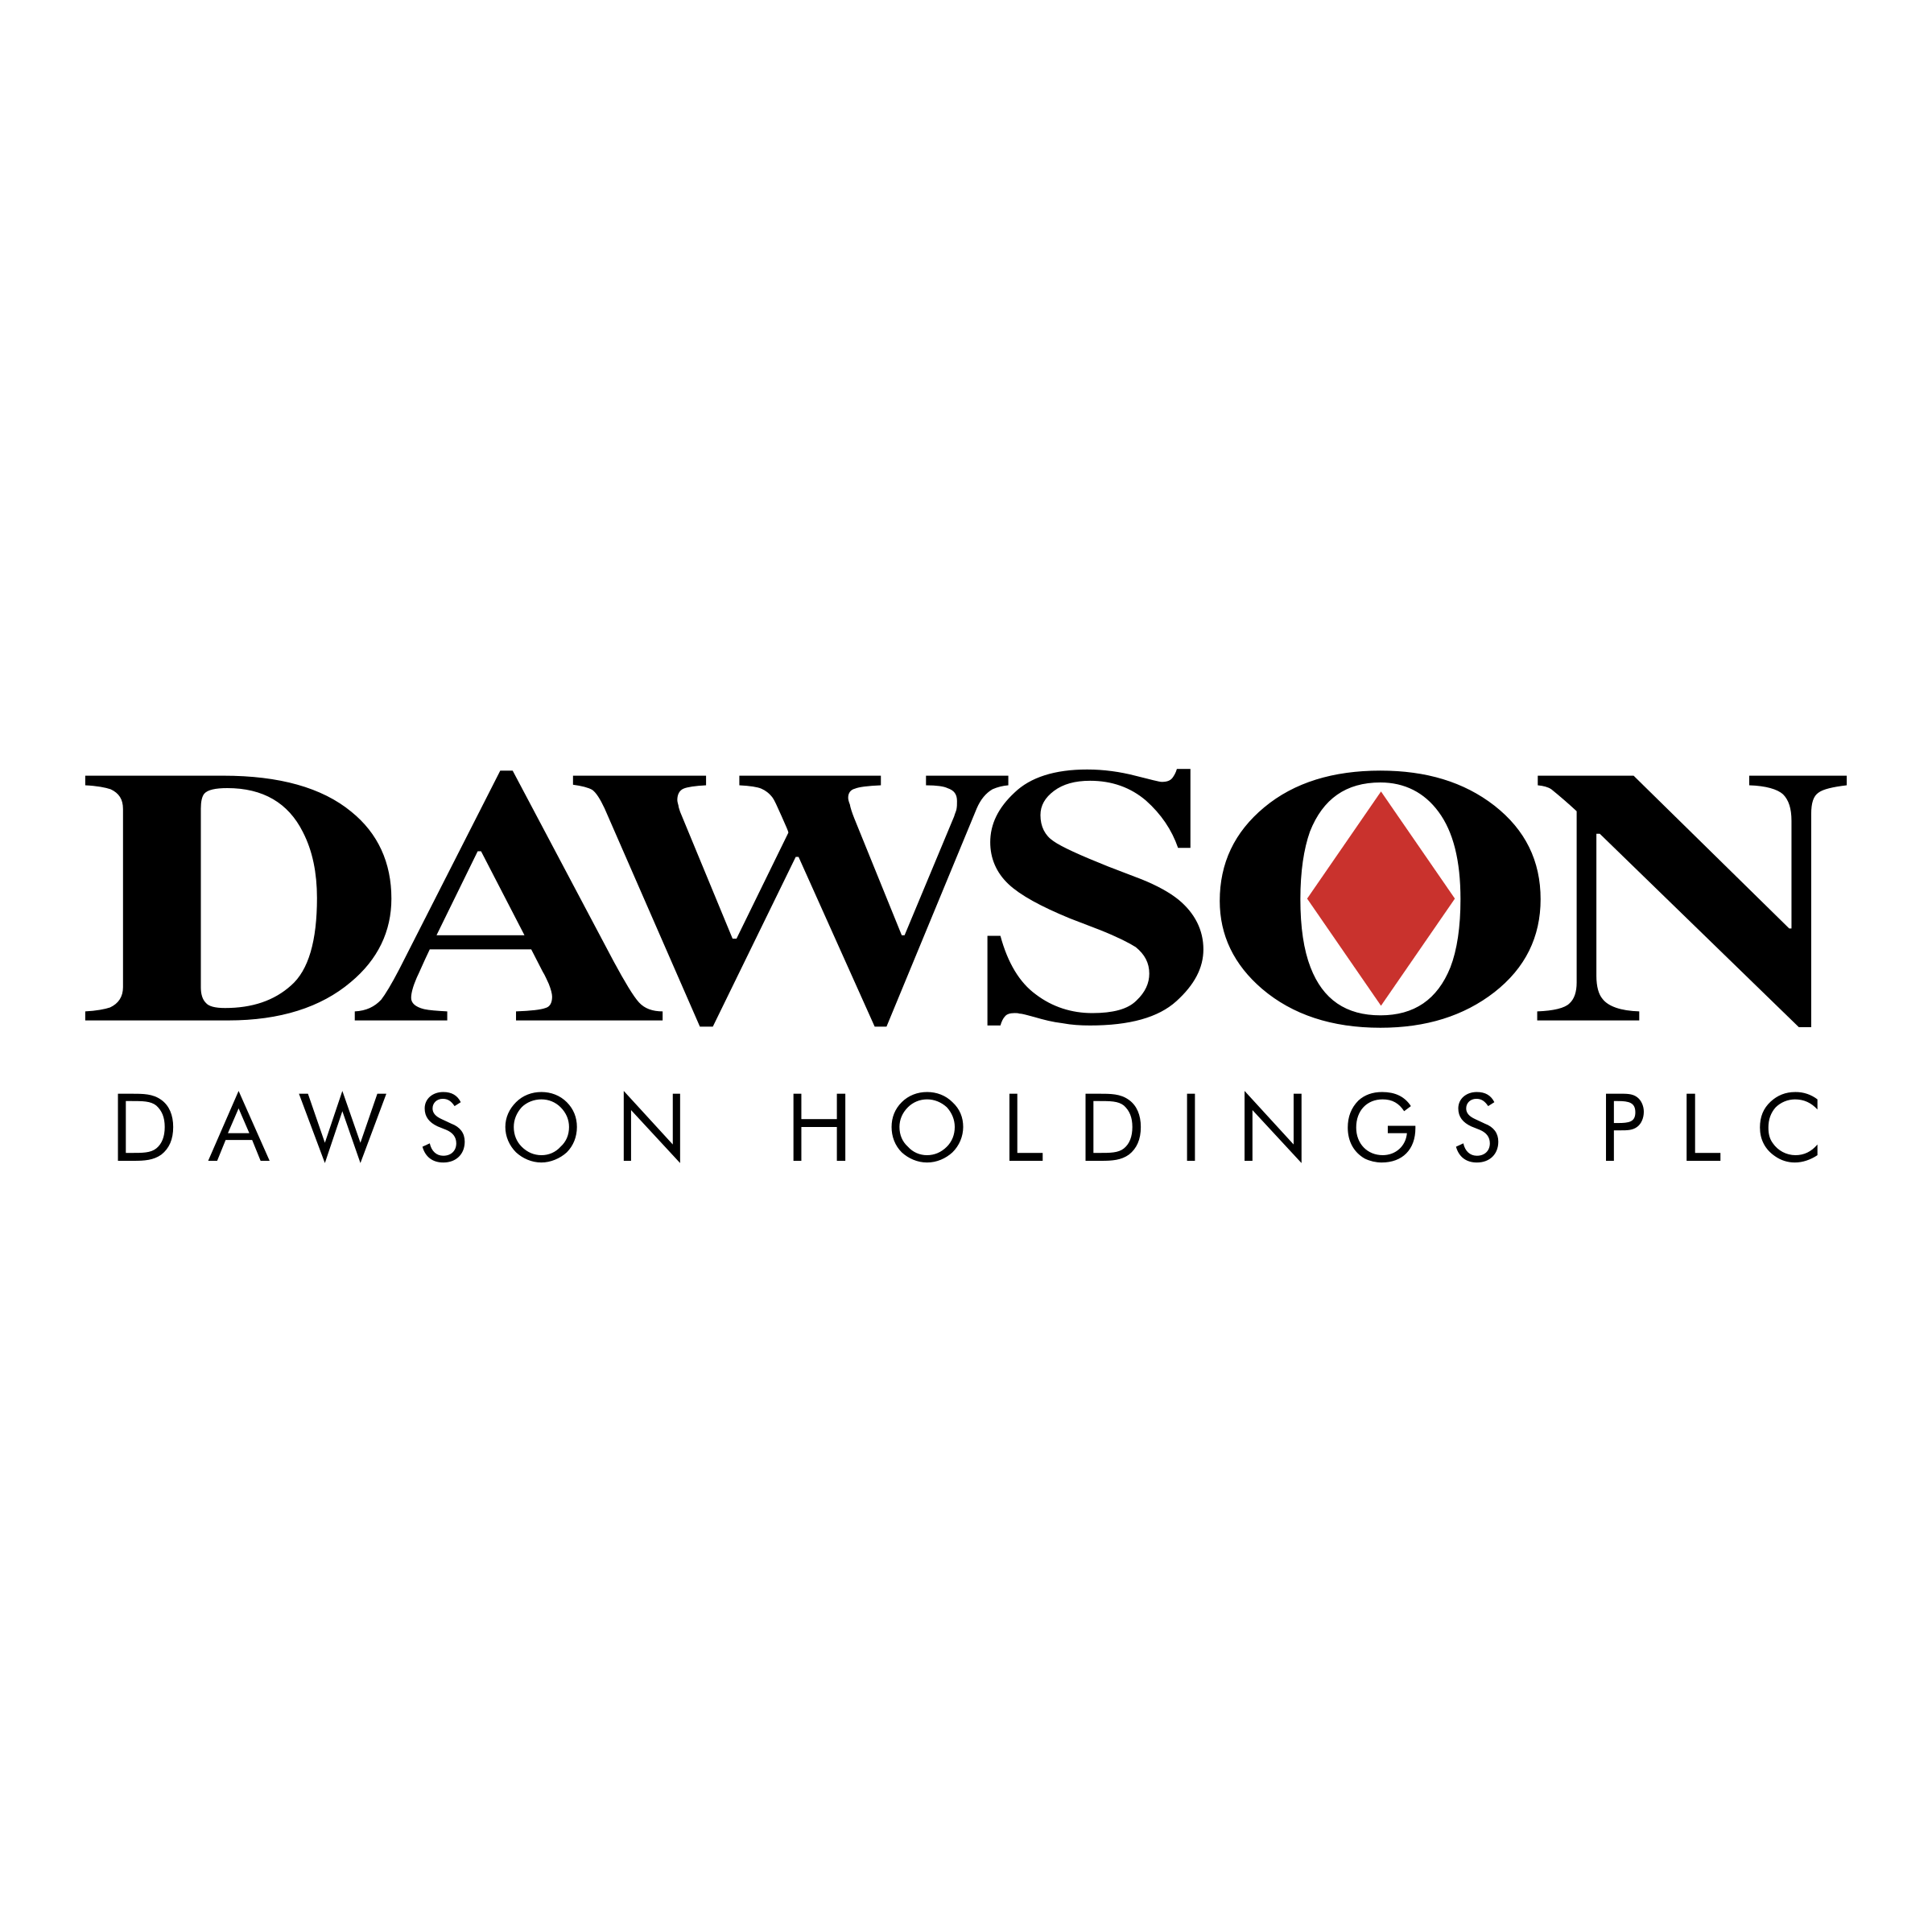 Dawson Logo - Dawson Holdings Logo PNG Transparent & SVG Vector - Freebie Supply